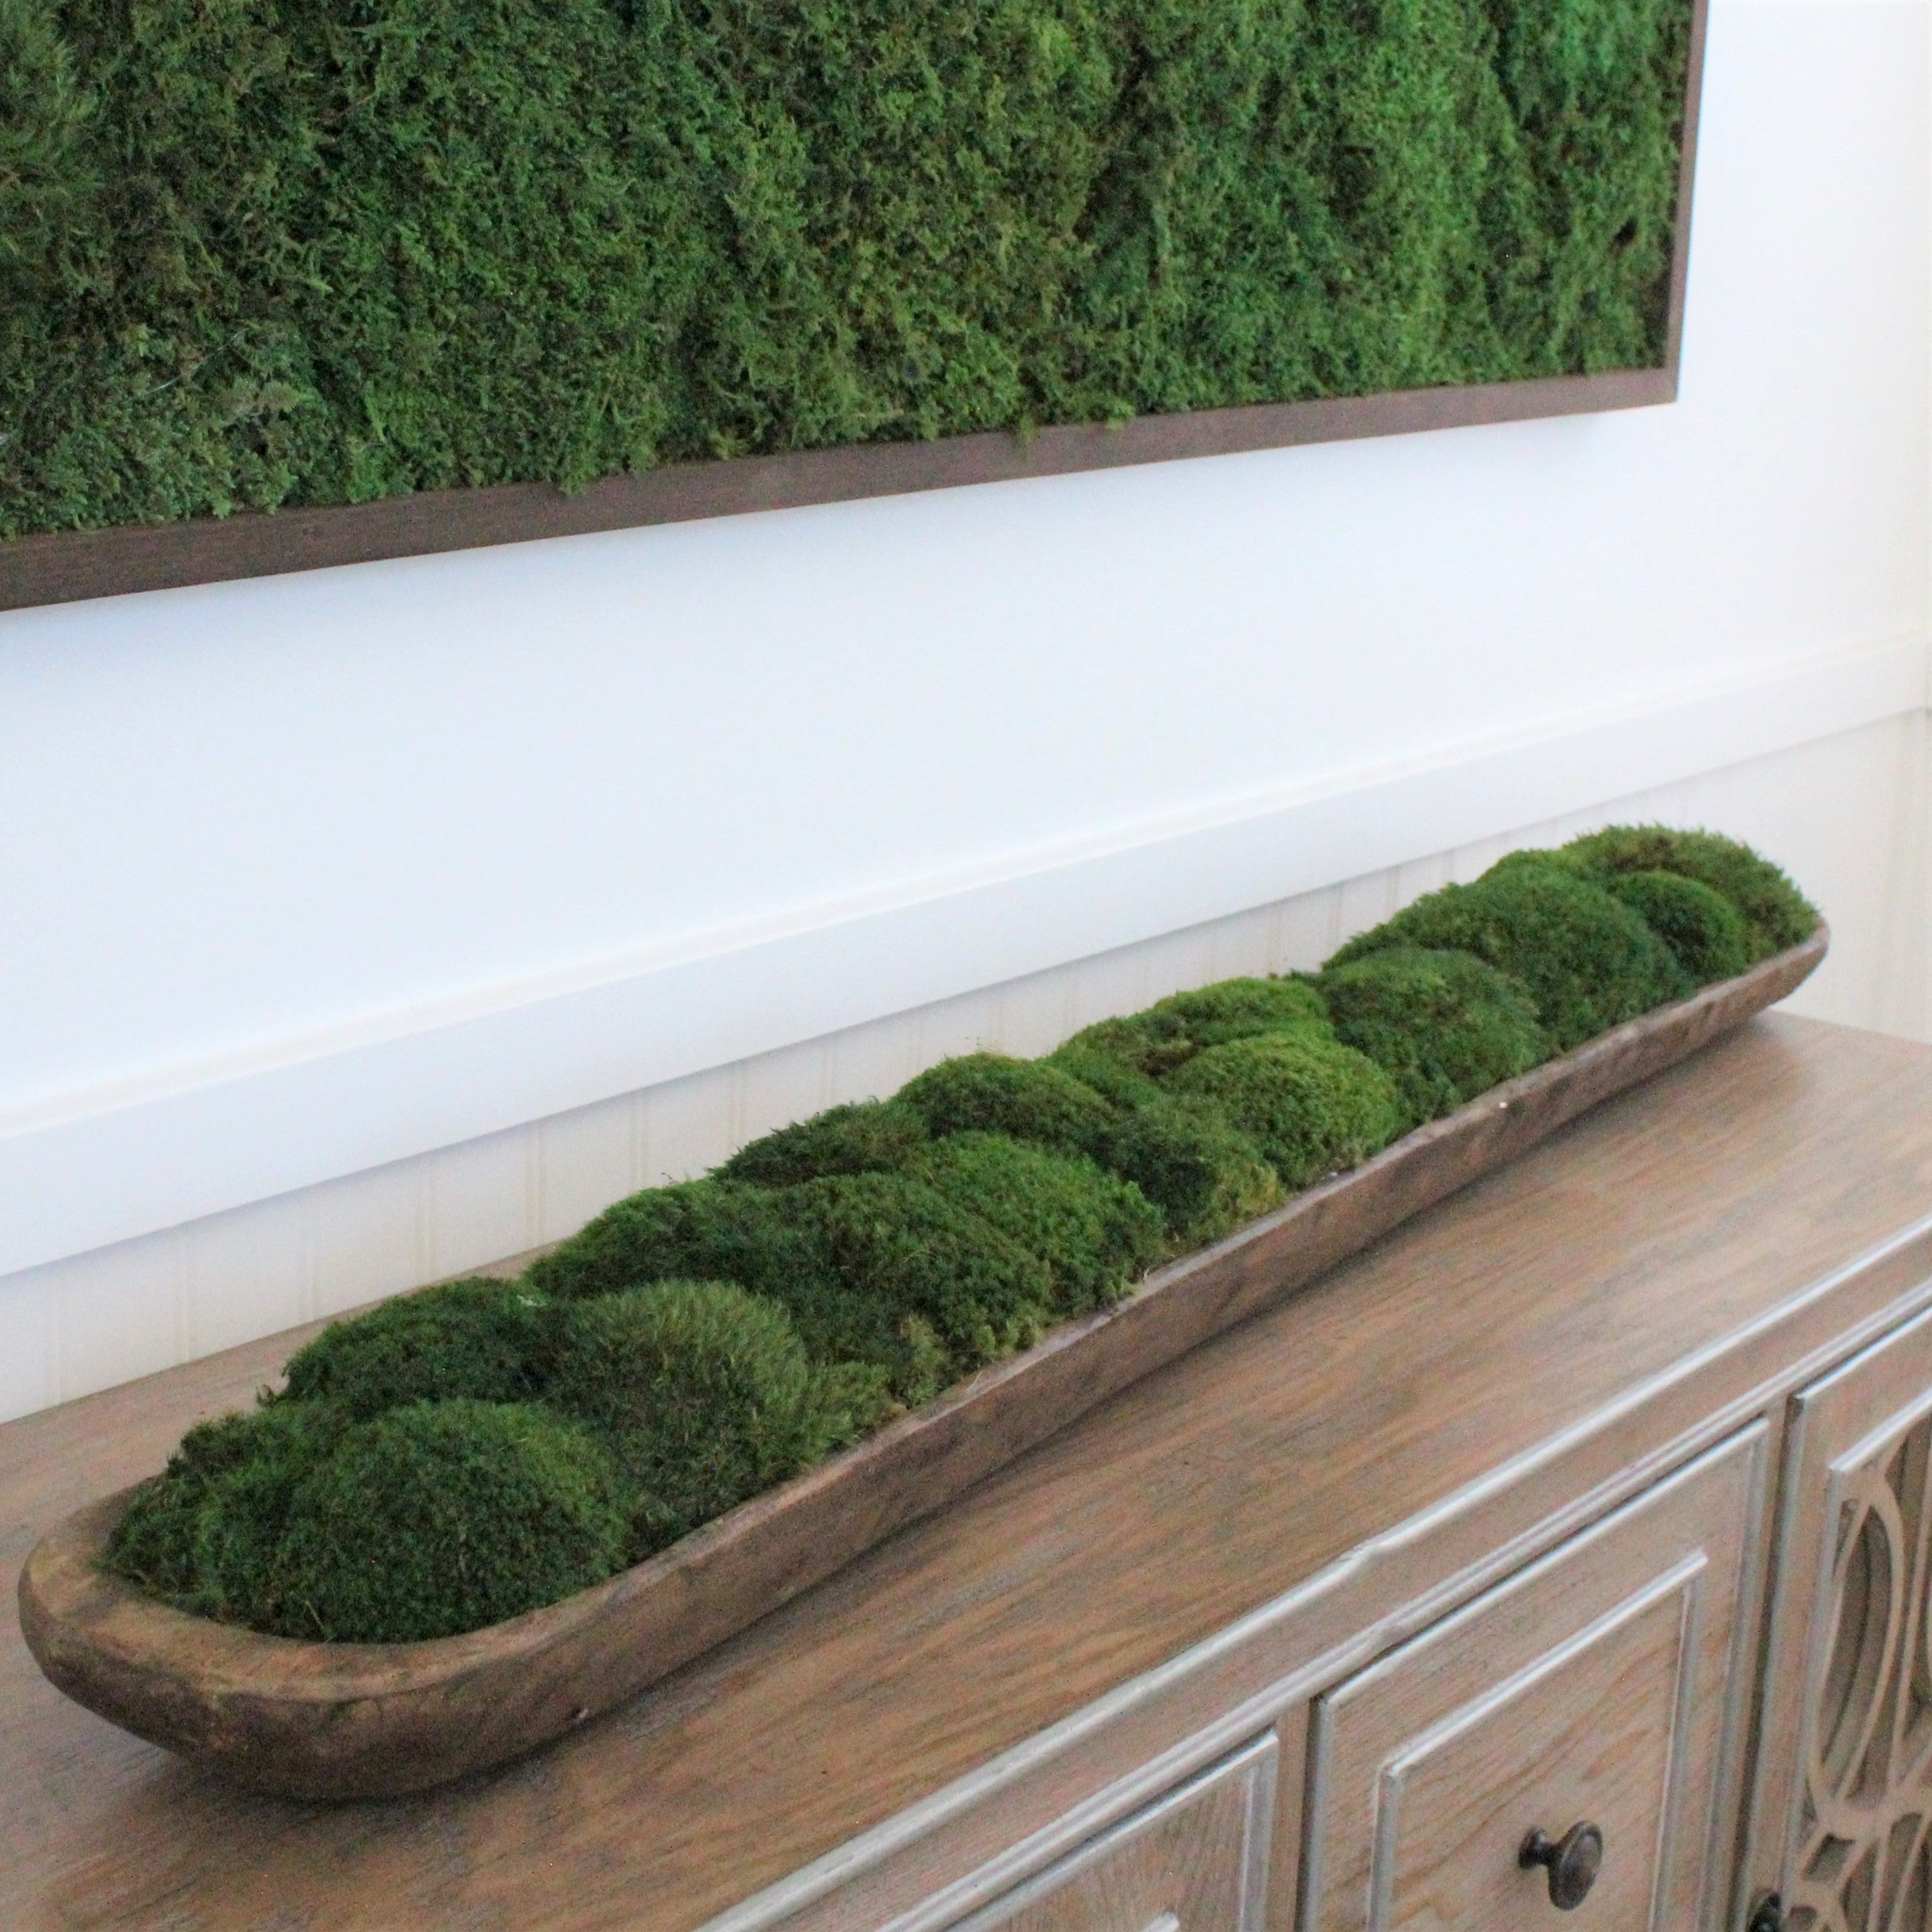 Simple Moss Bowl Centerpiece DIY - Adorn the Table